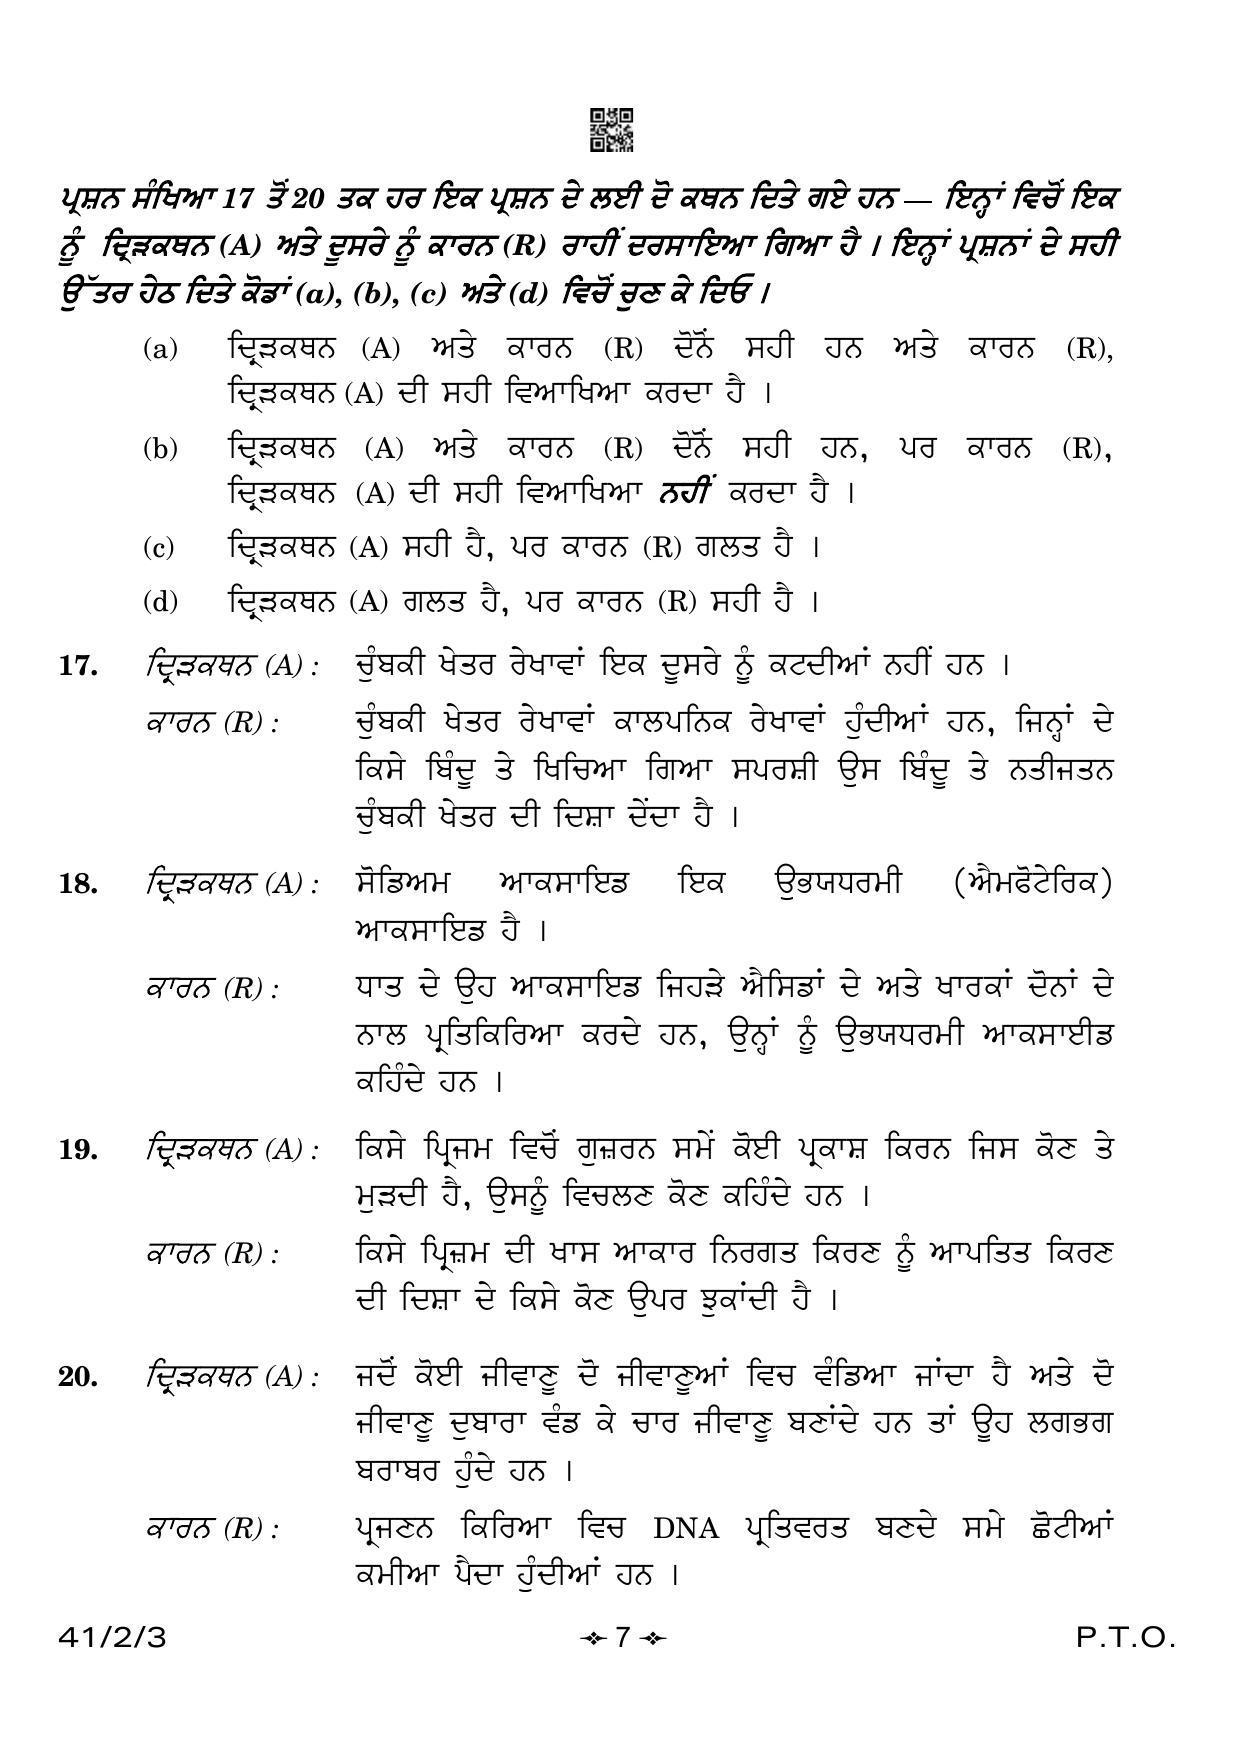 CBSE Class 10 41-2-3 Science Punjabi Version 2023 Question Paper - Page 7